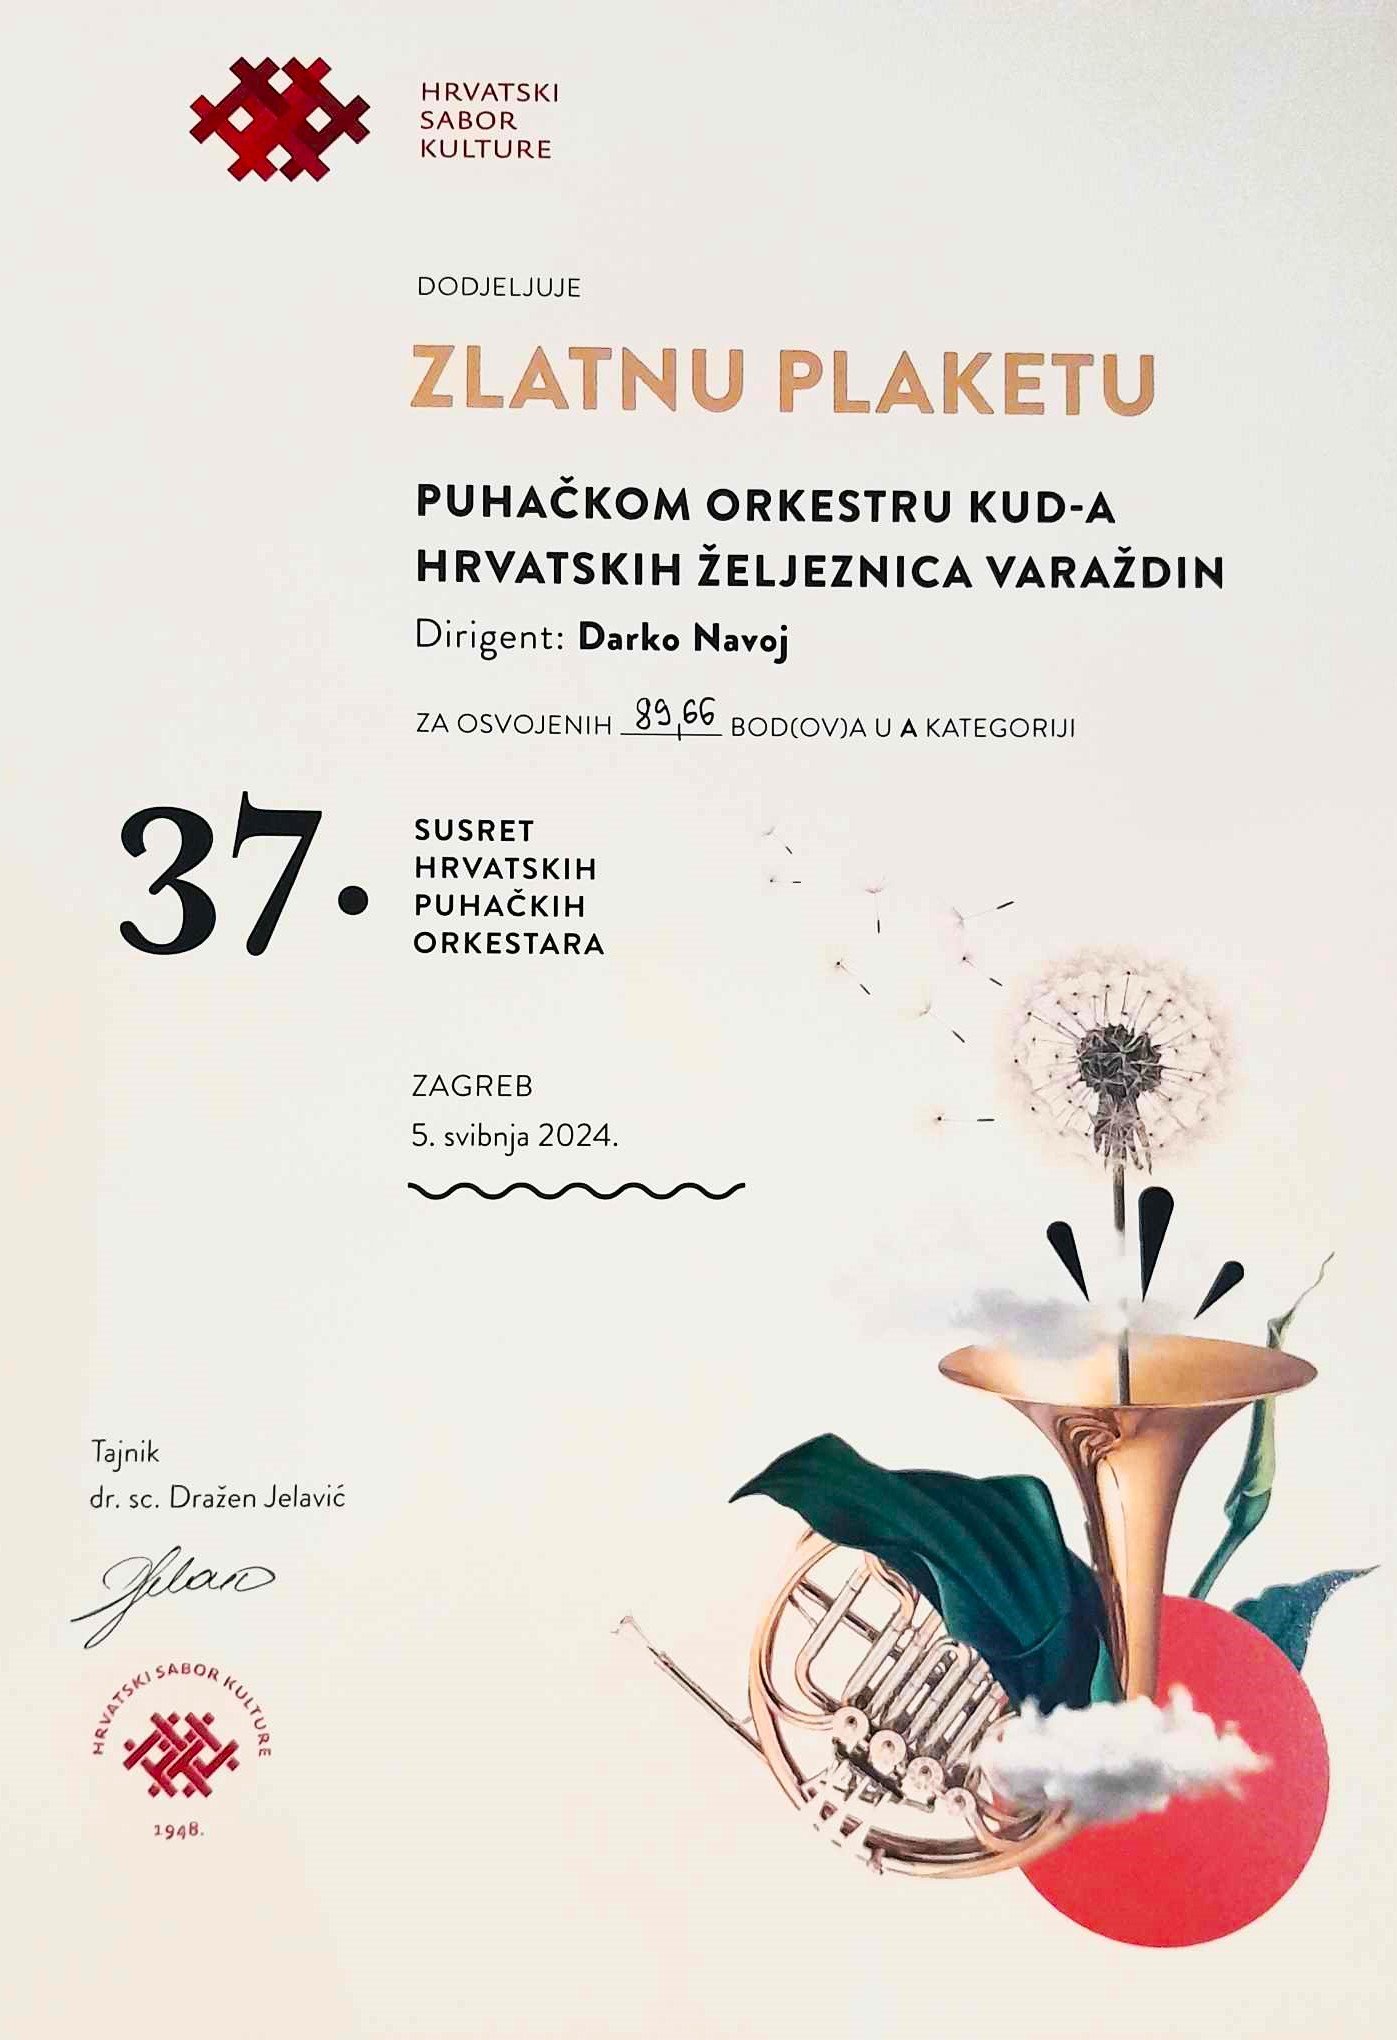 puhacki-orkestar-kudhzvz-zagreb-2024